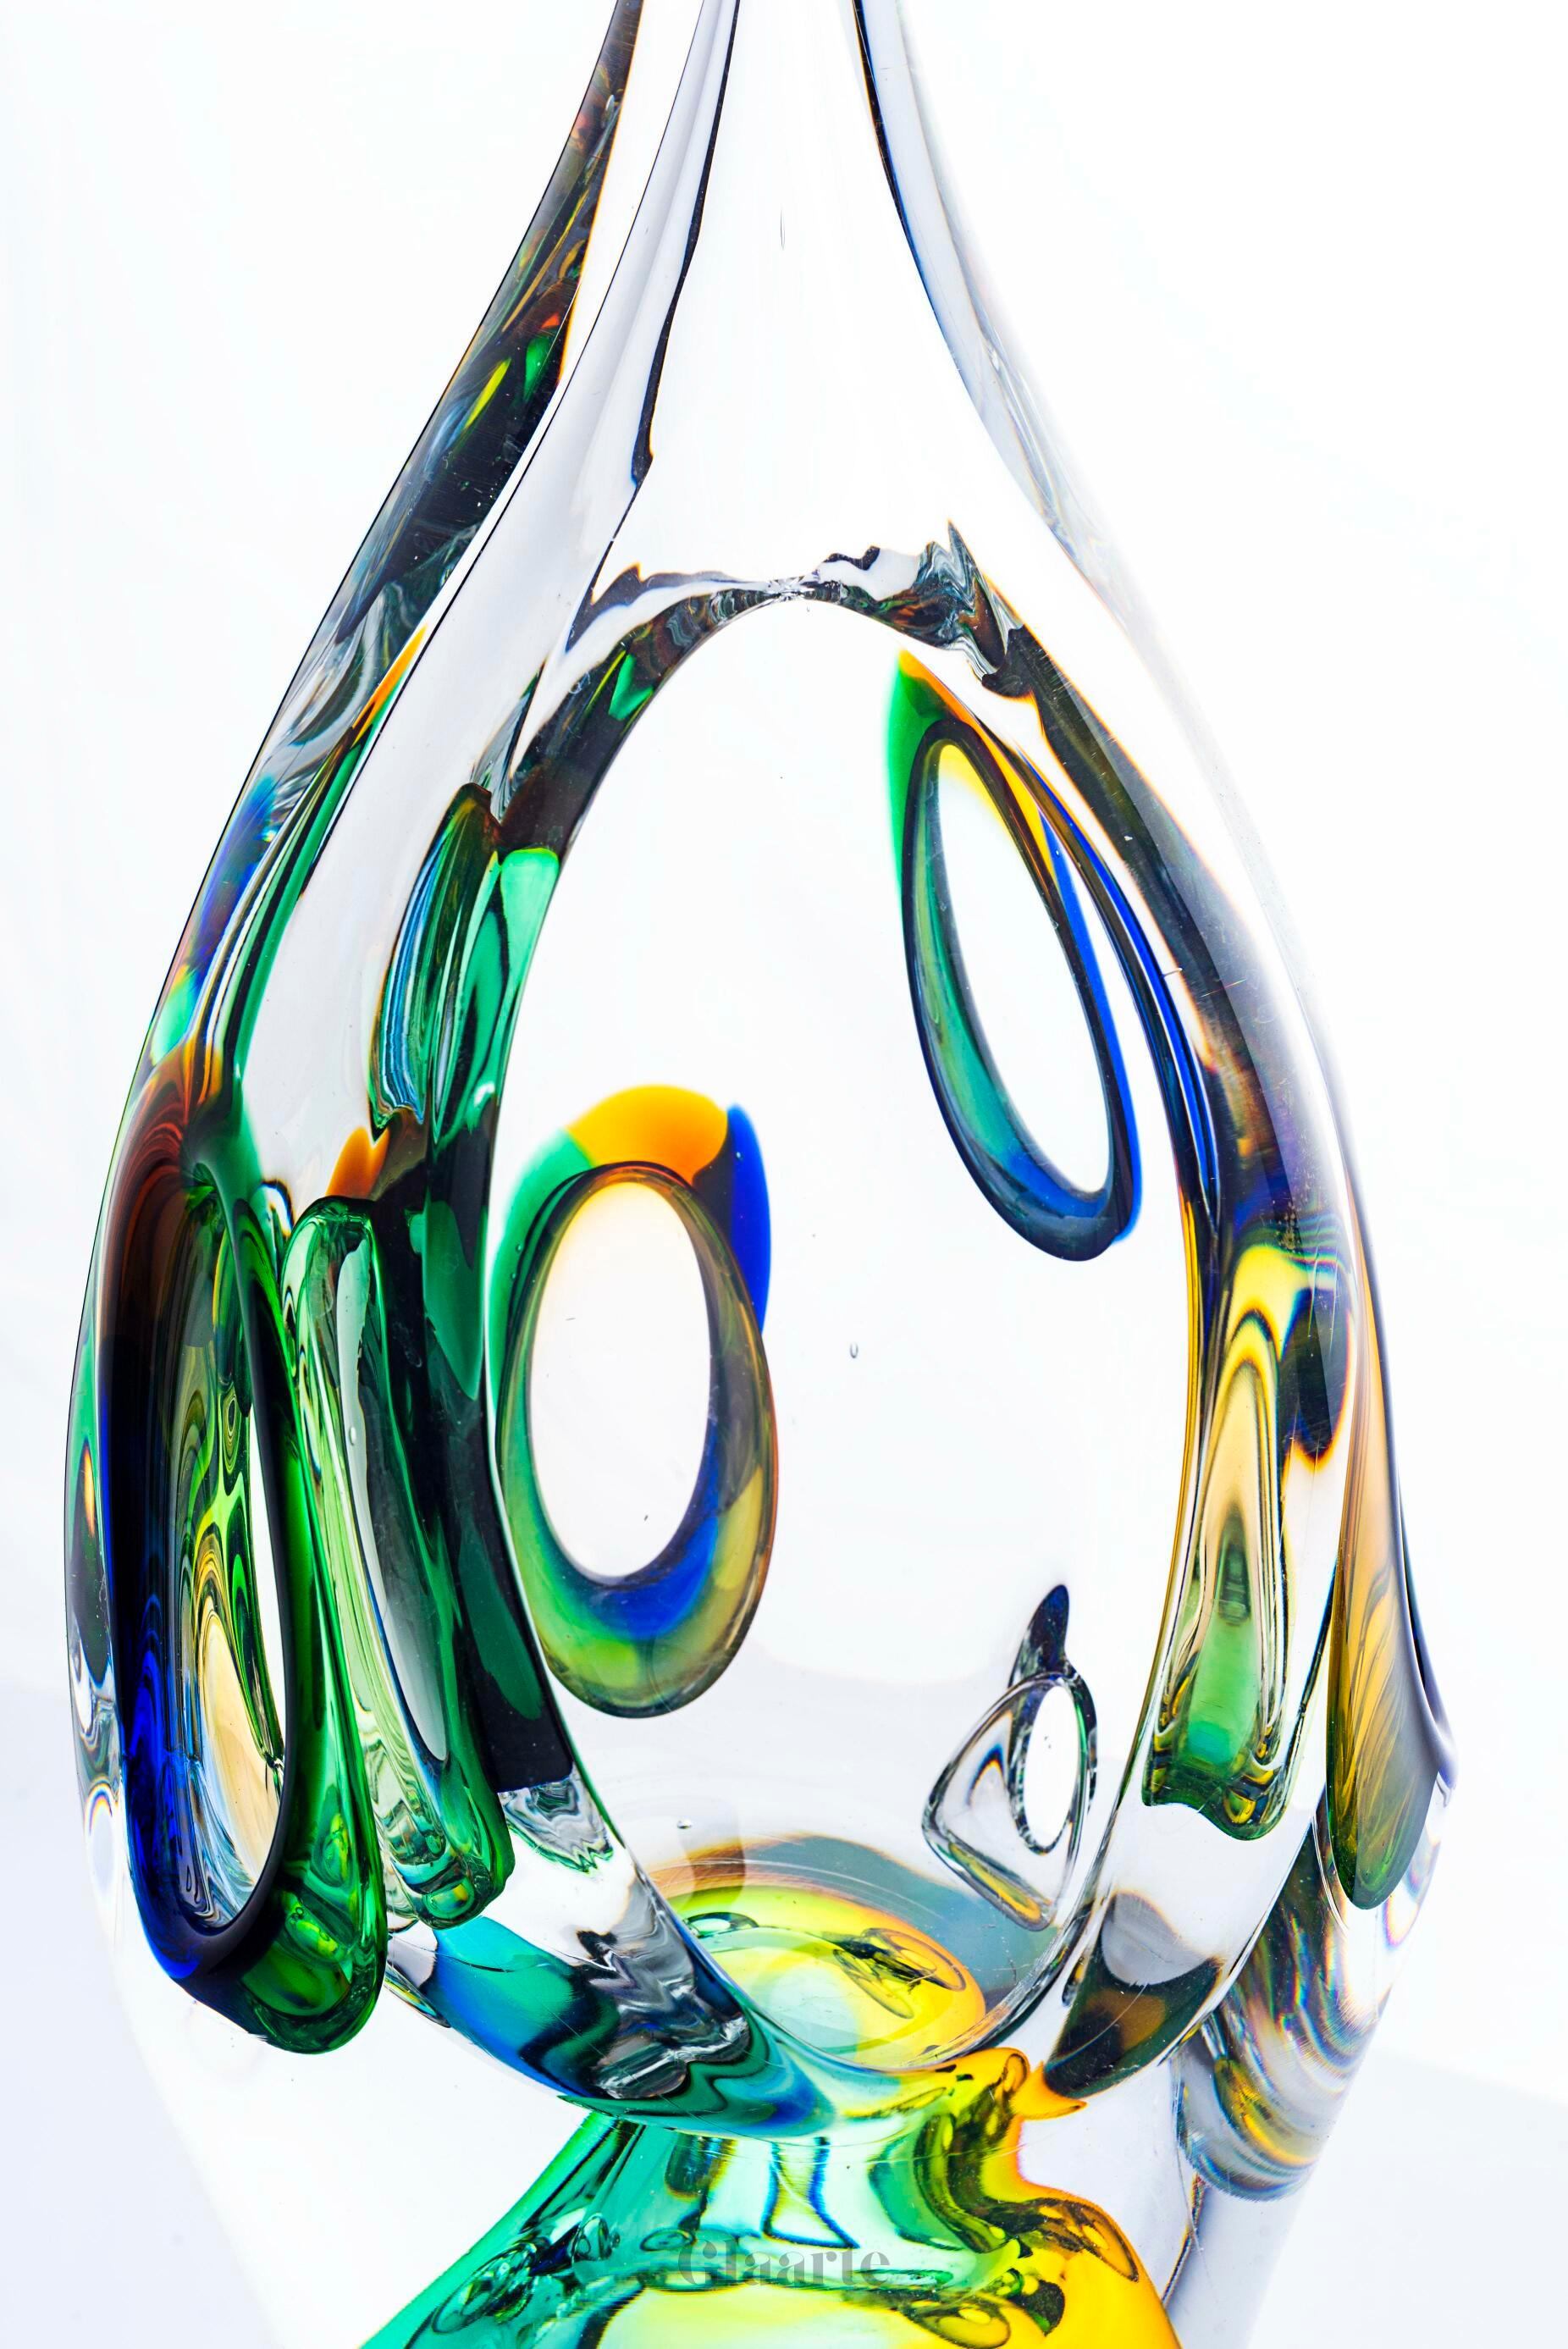 Wysoka kryształowa rzeźba szklana dekoracyjna Alta Luce - Glaarte